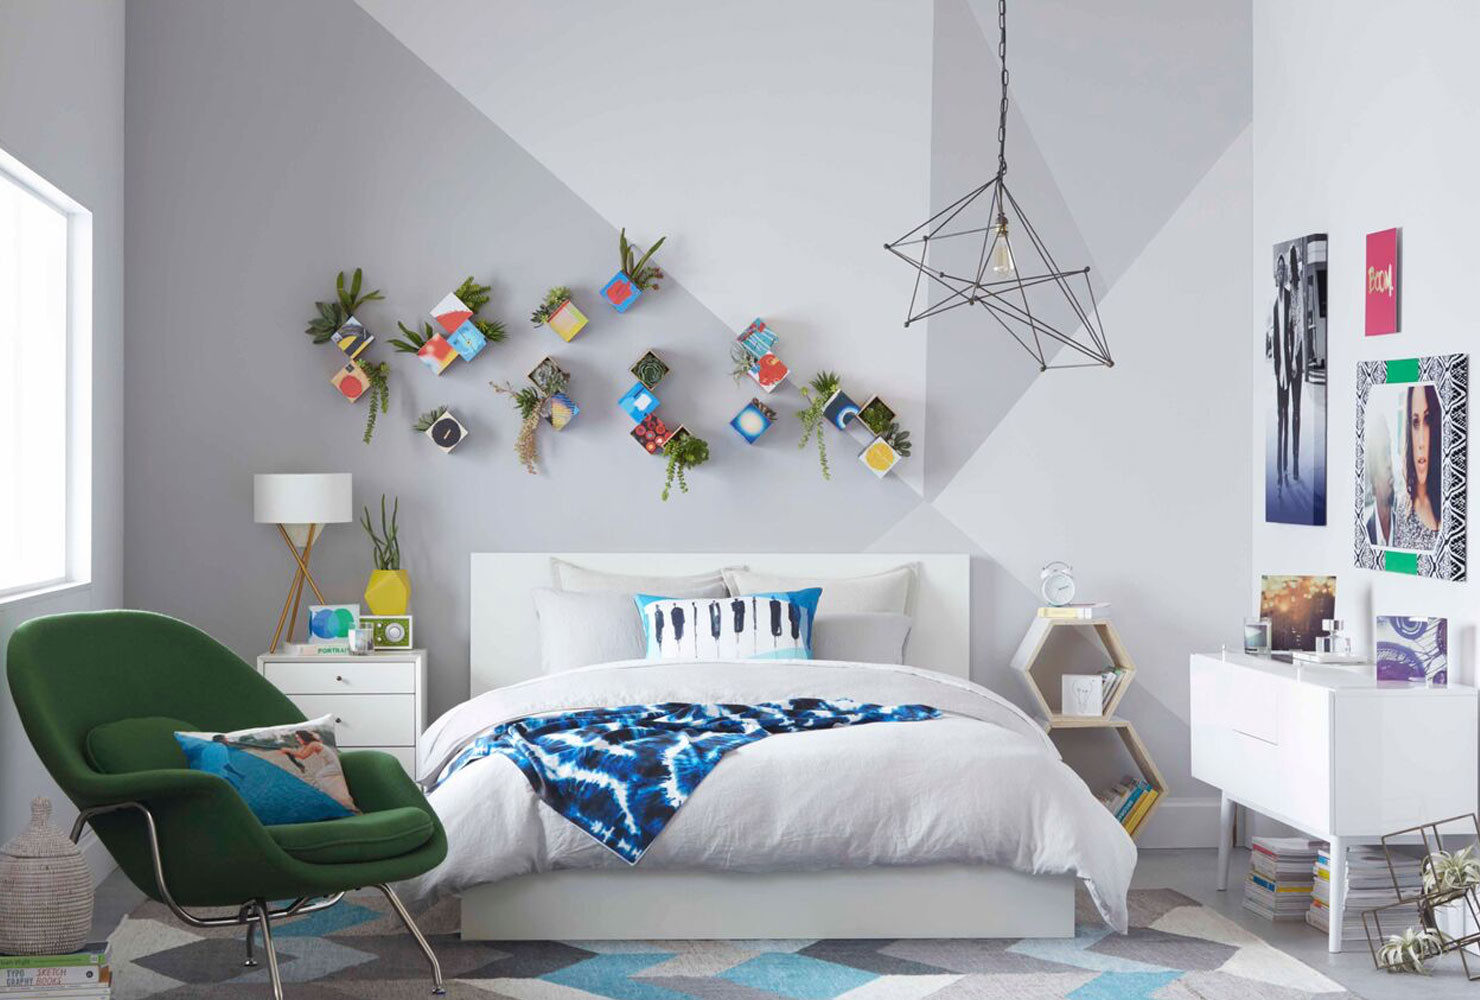 Bedroom Wall Design Ideas
 24 DIY Bedroom Decor Ideas To Inspire You With Printables